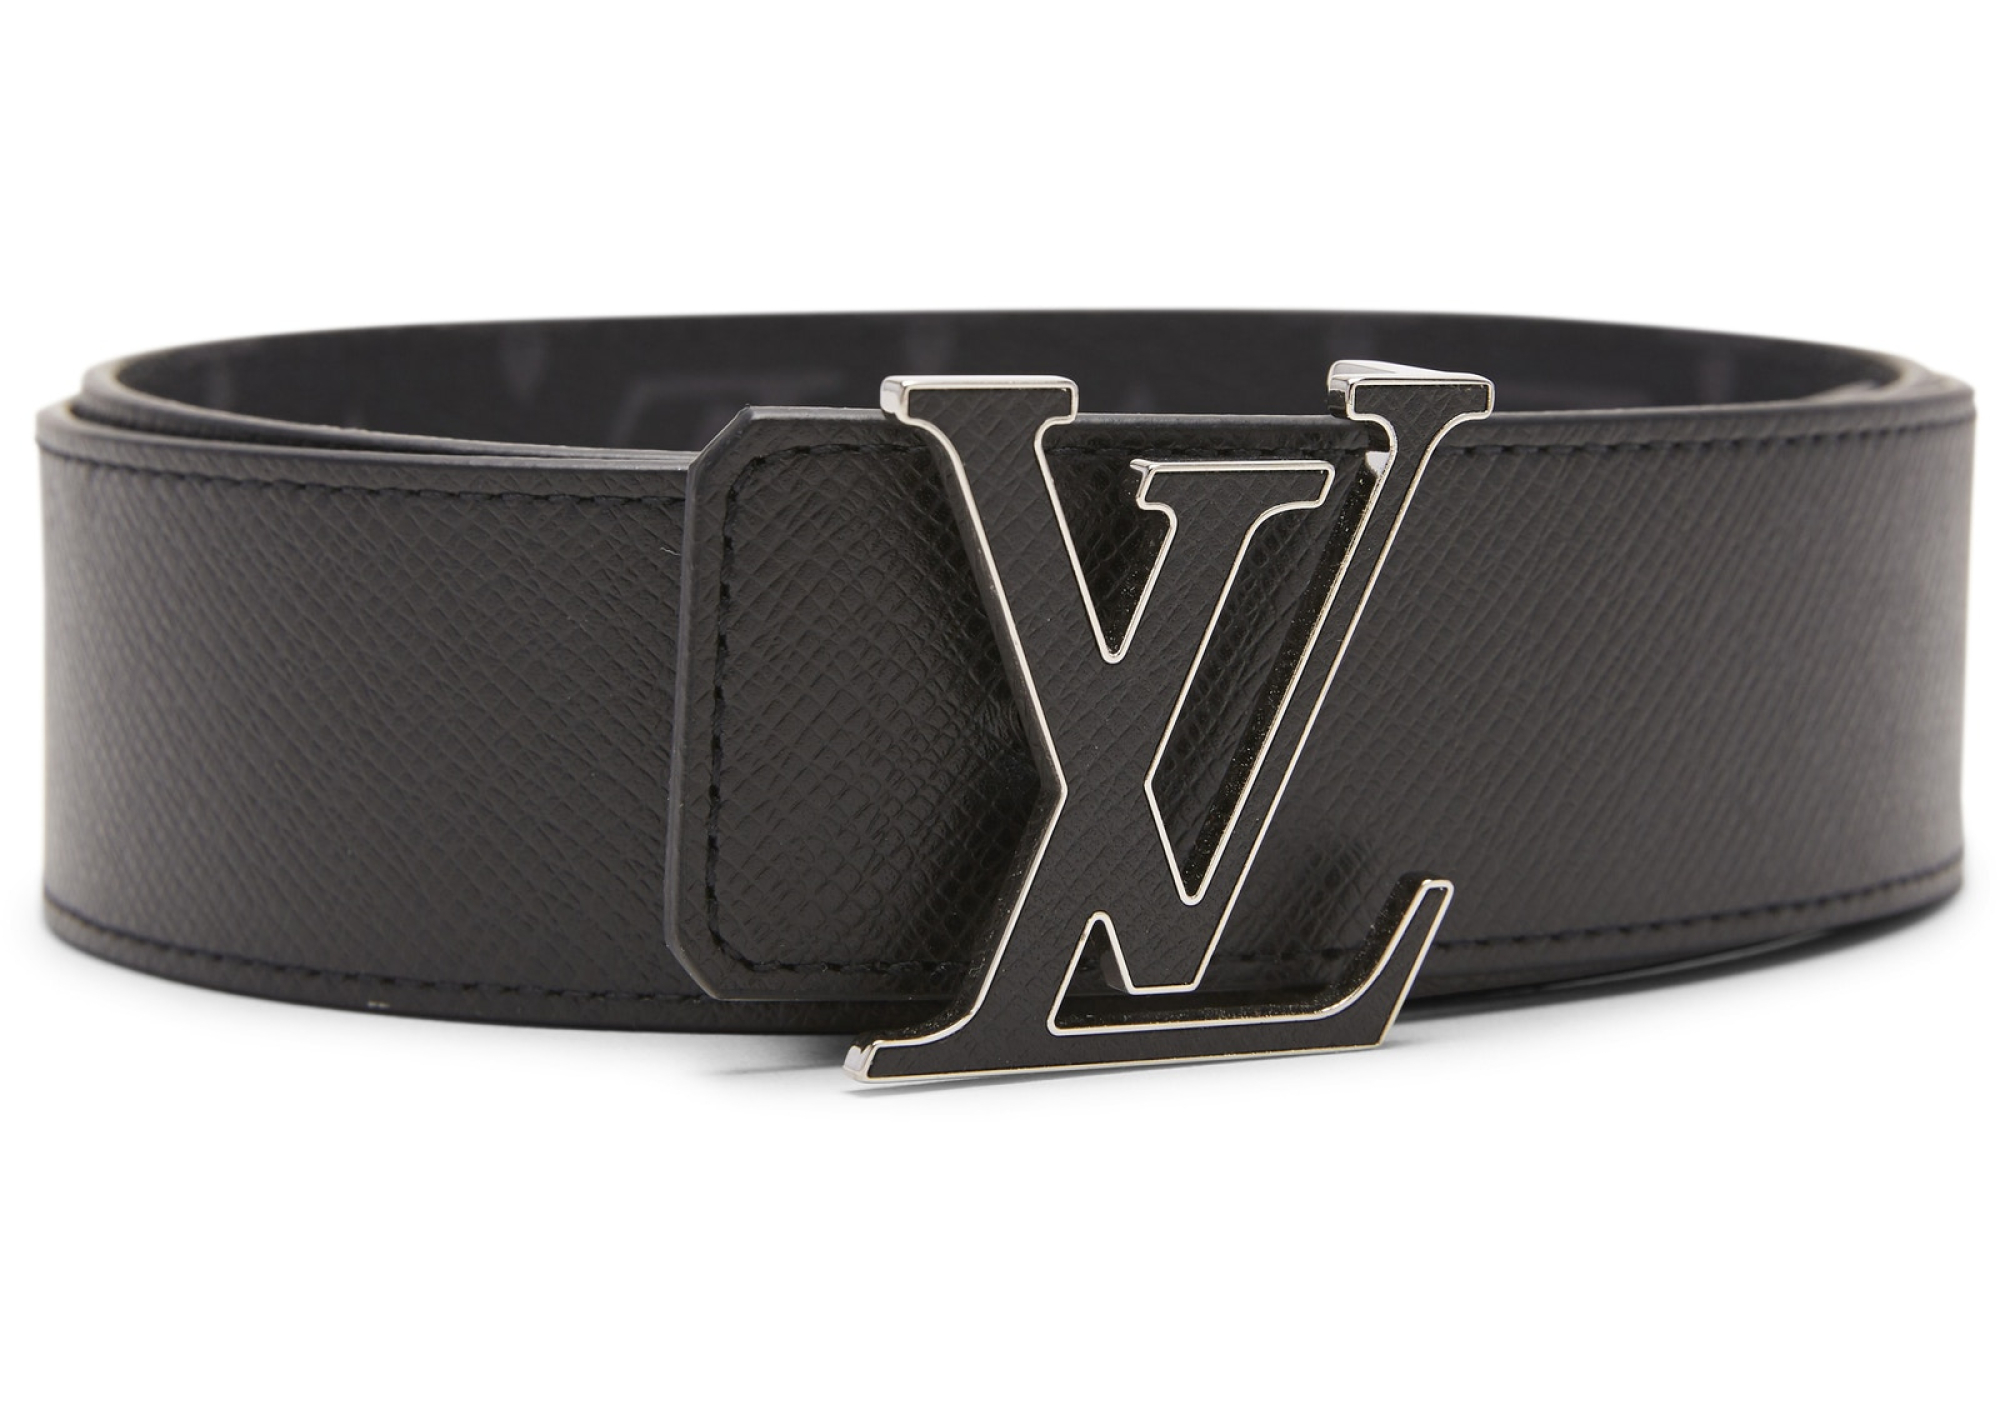 Louis Vuitton LV Initiales Reversible Belt Monogram Eclipse Taiga 40MM White